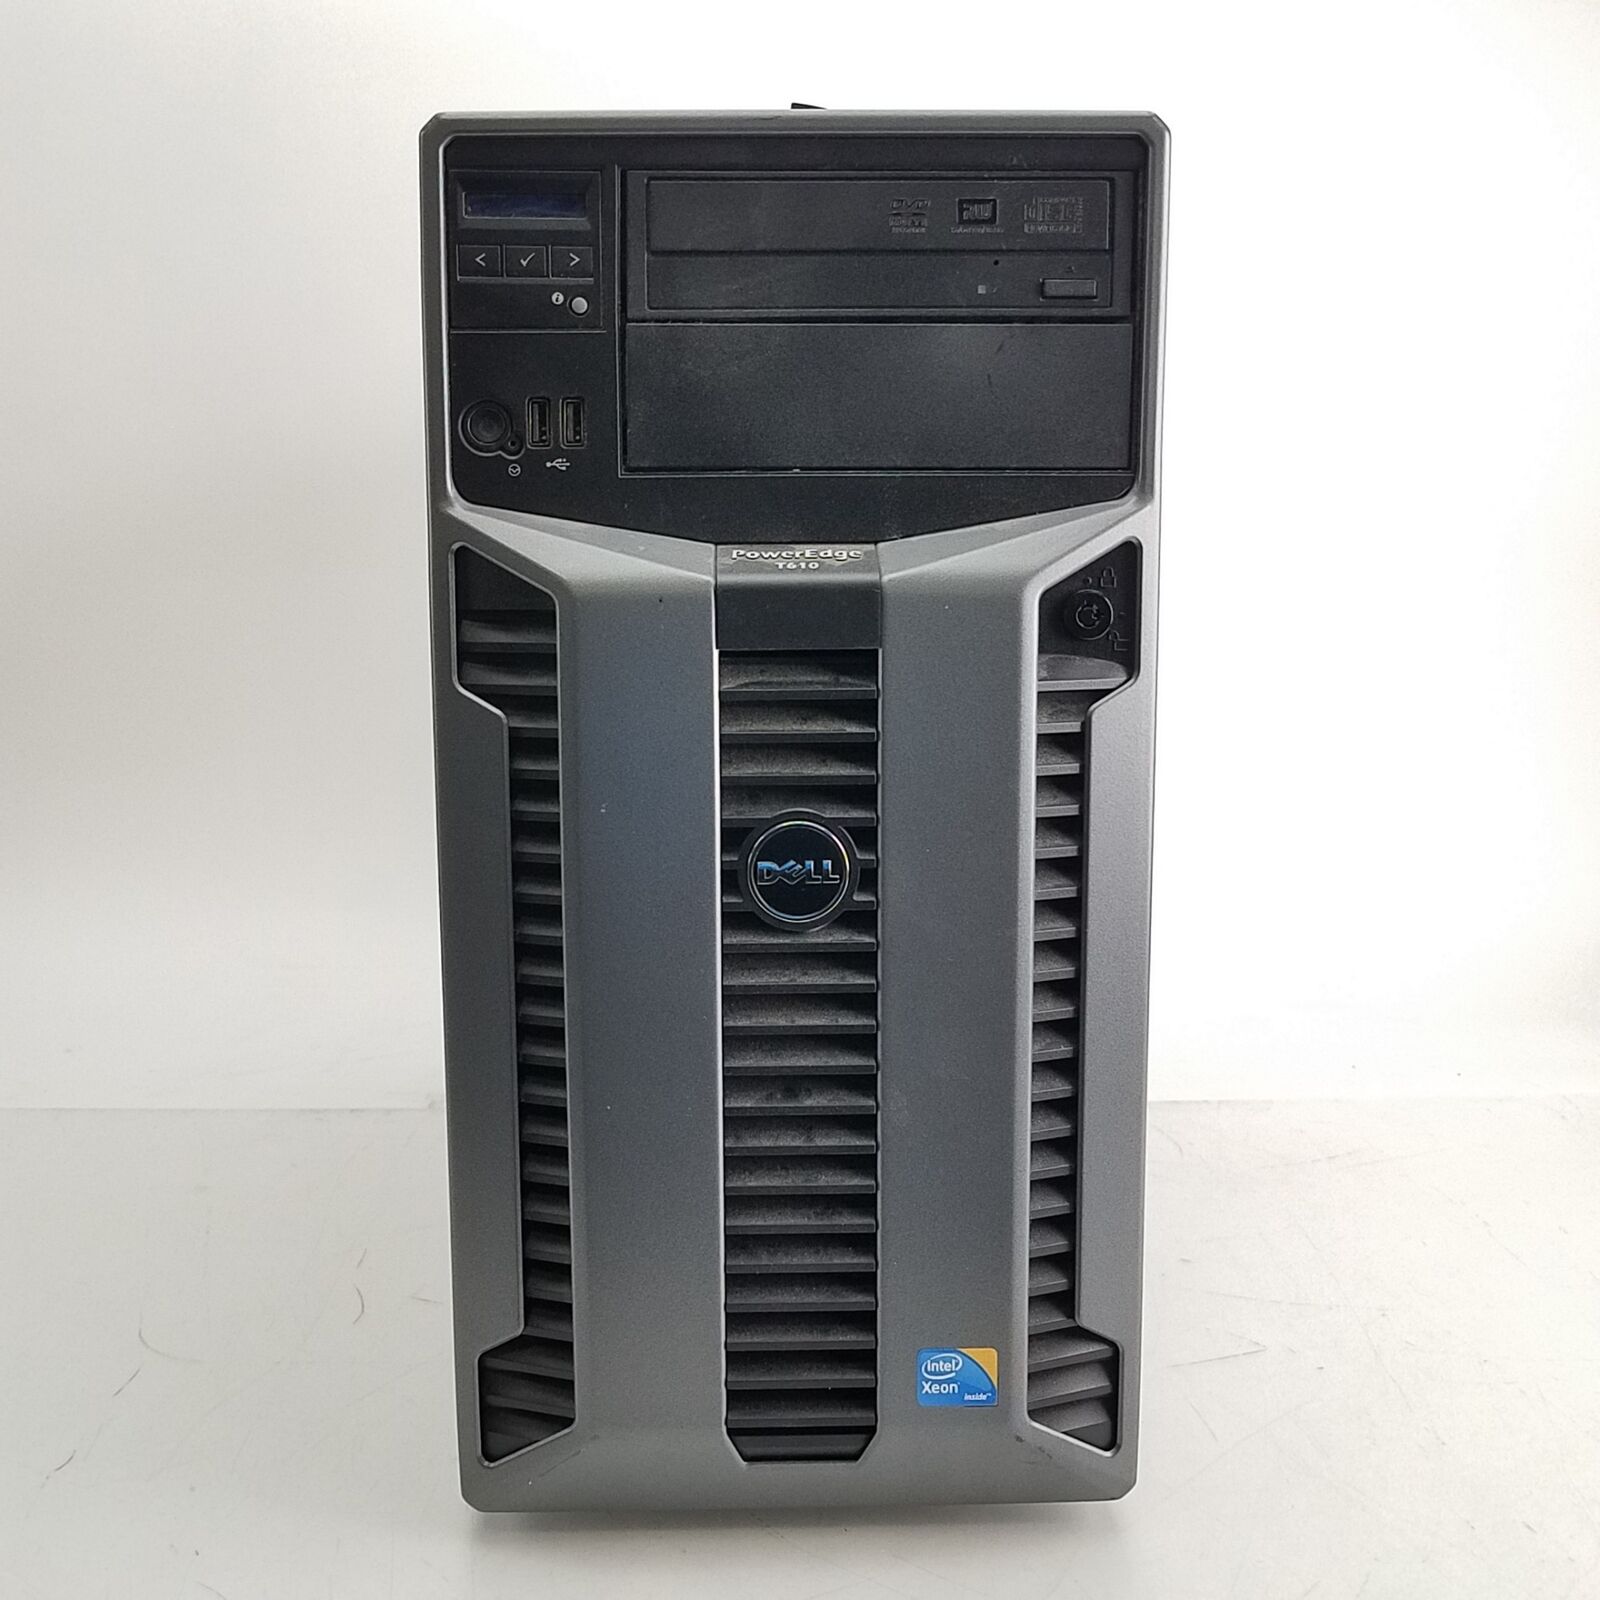 Dell PowerEdge T610 Server Intel Xeon E5630 2.53GHz 12GB RAM No HDDs